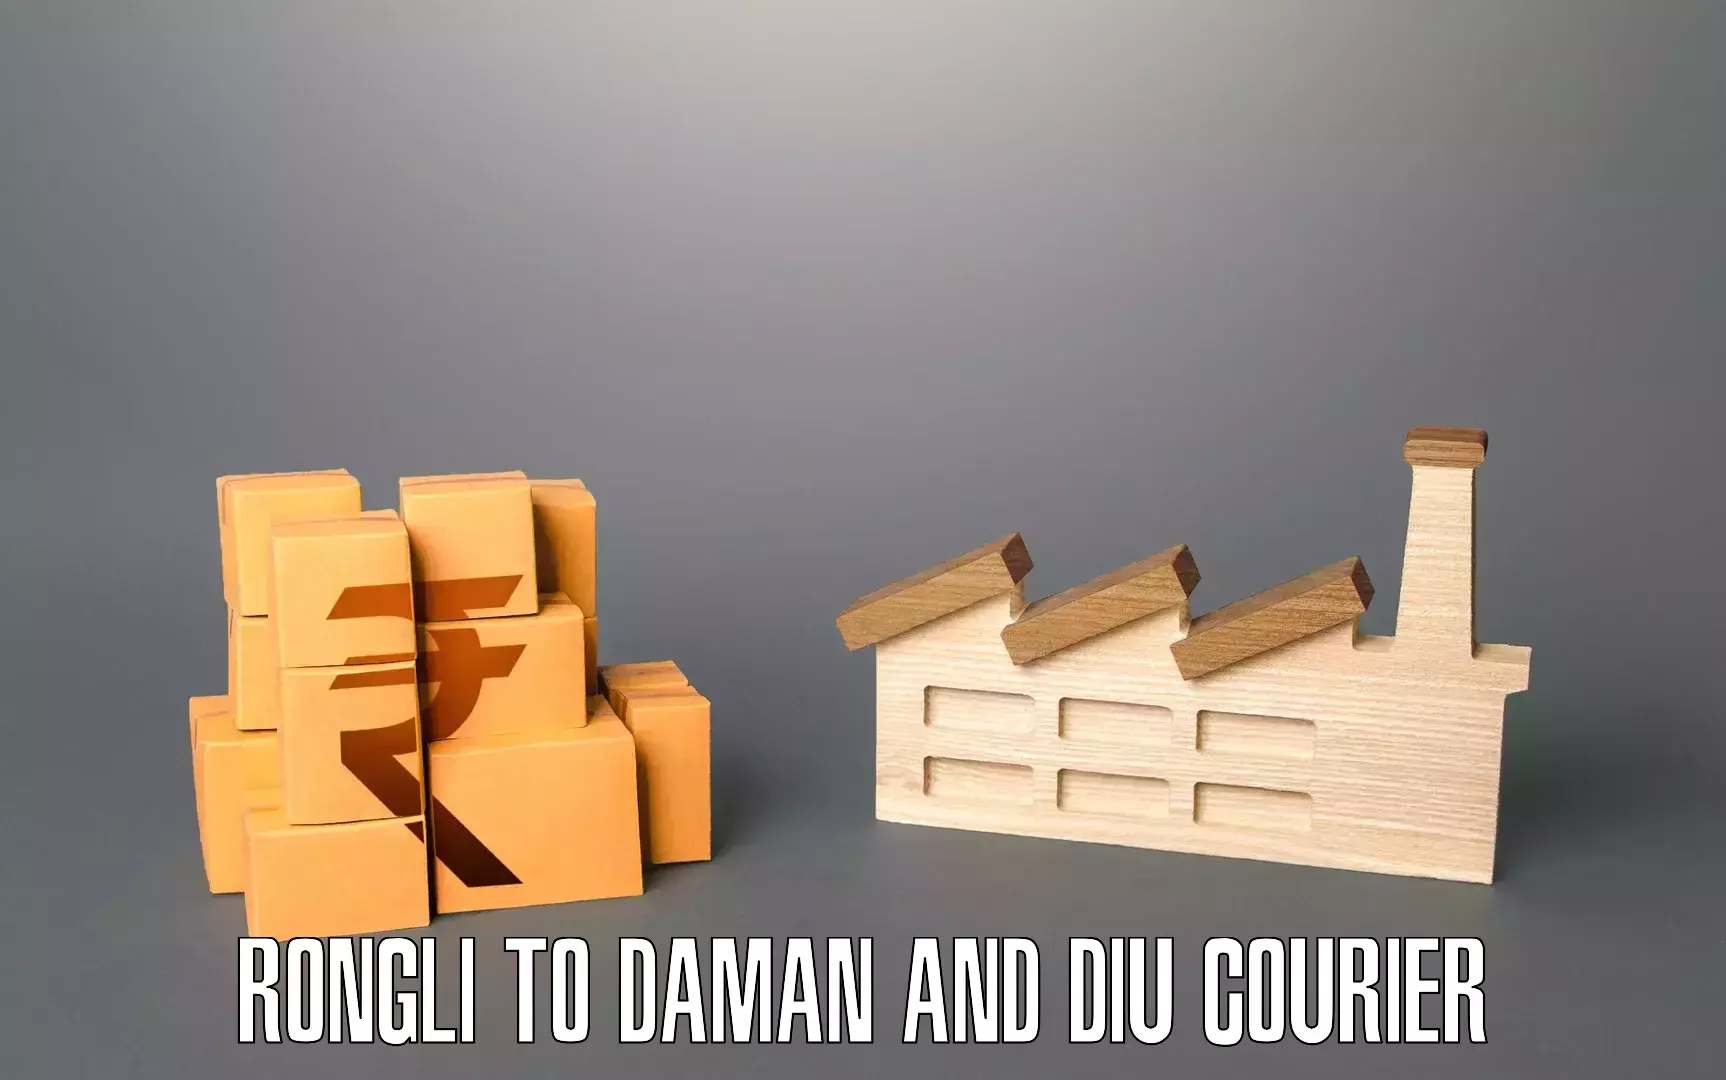 Professional moving company Rongli to Daman